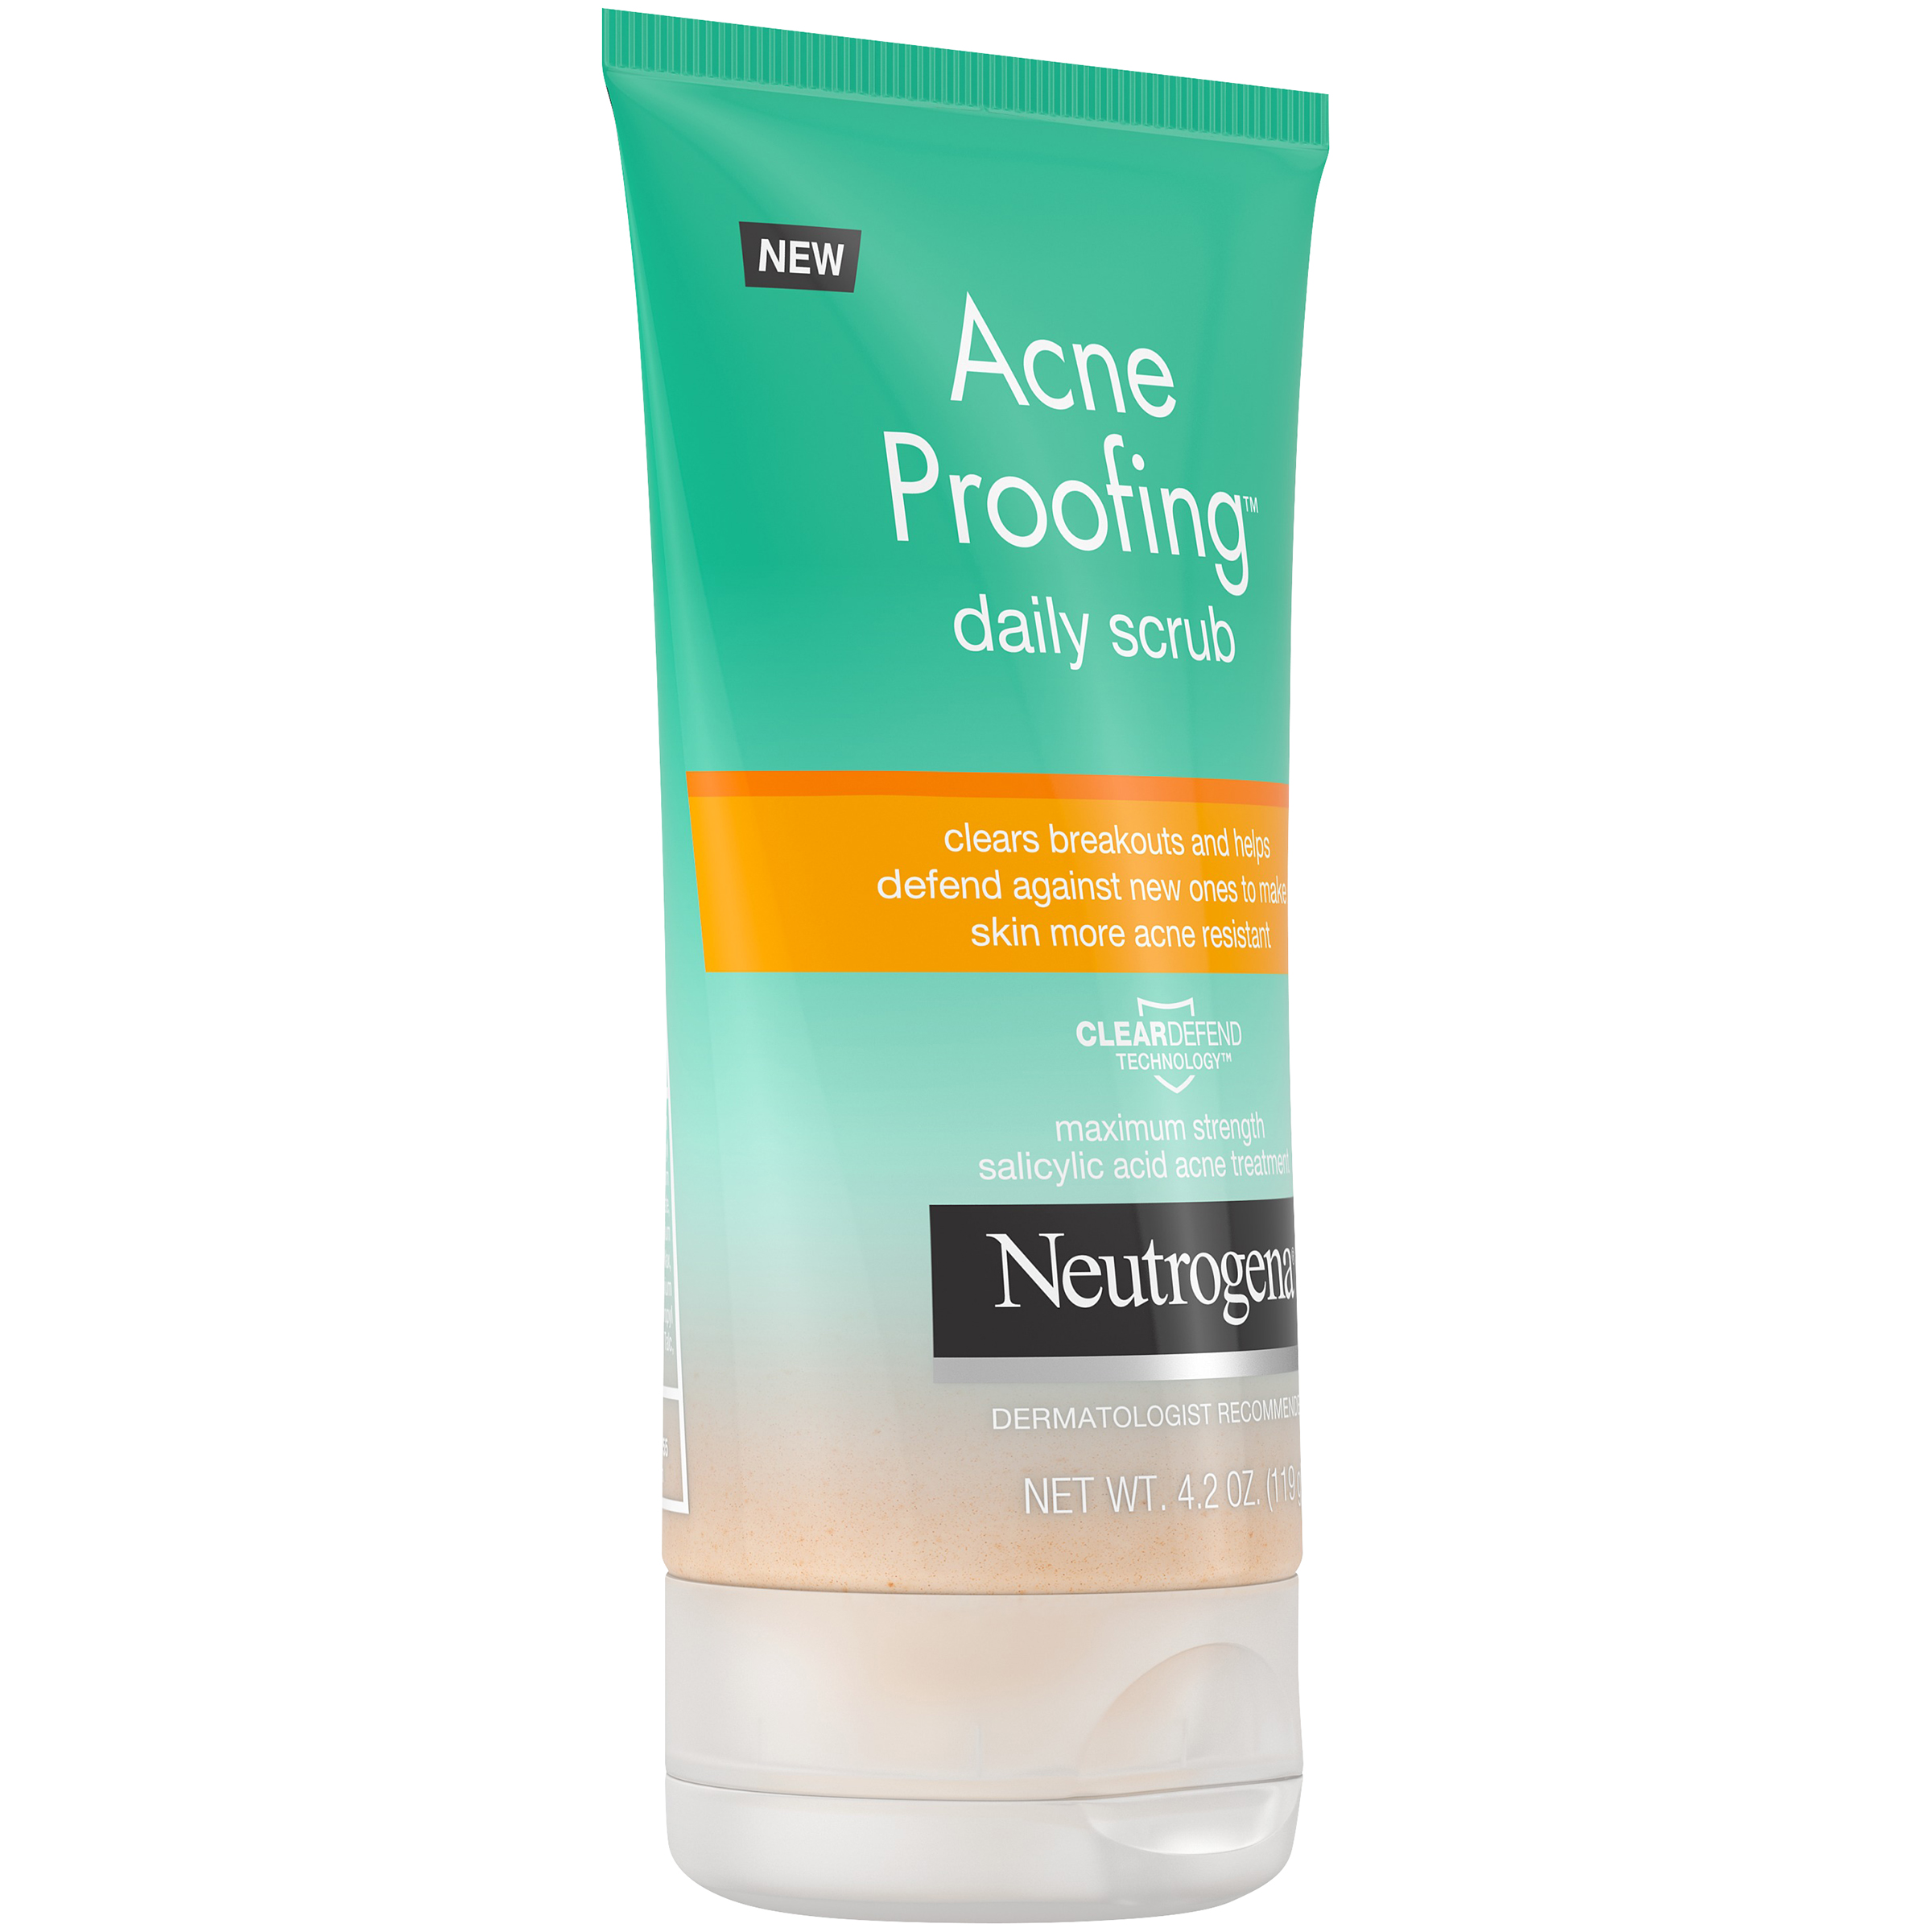 Neutrogena Acne Proofing Exfoliating Facial Scrub, 4.2 oz